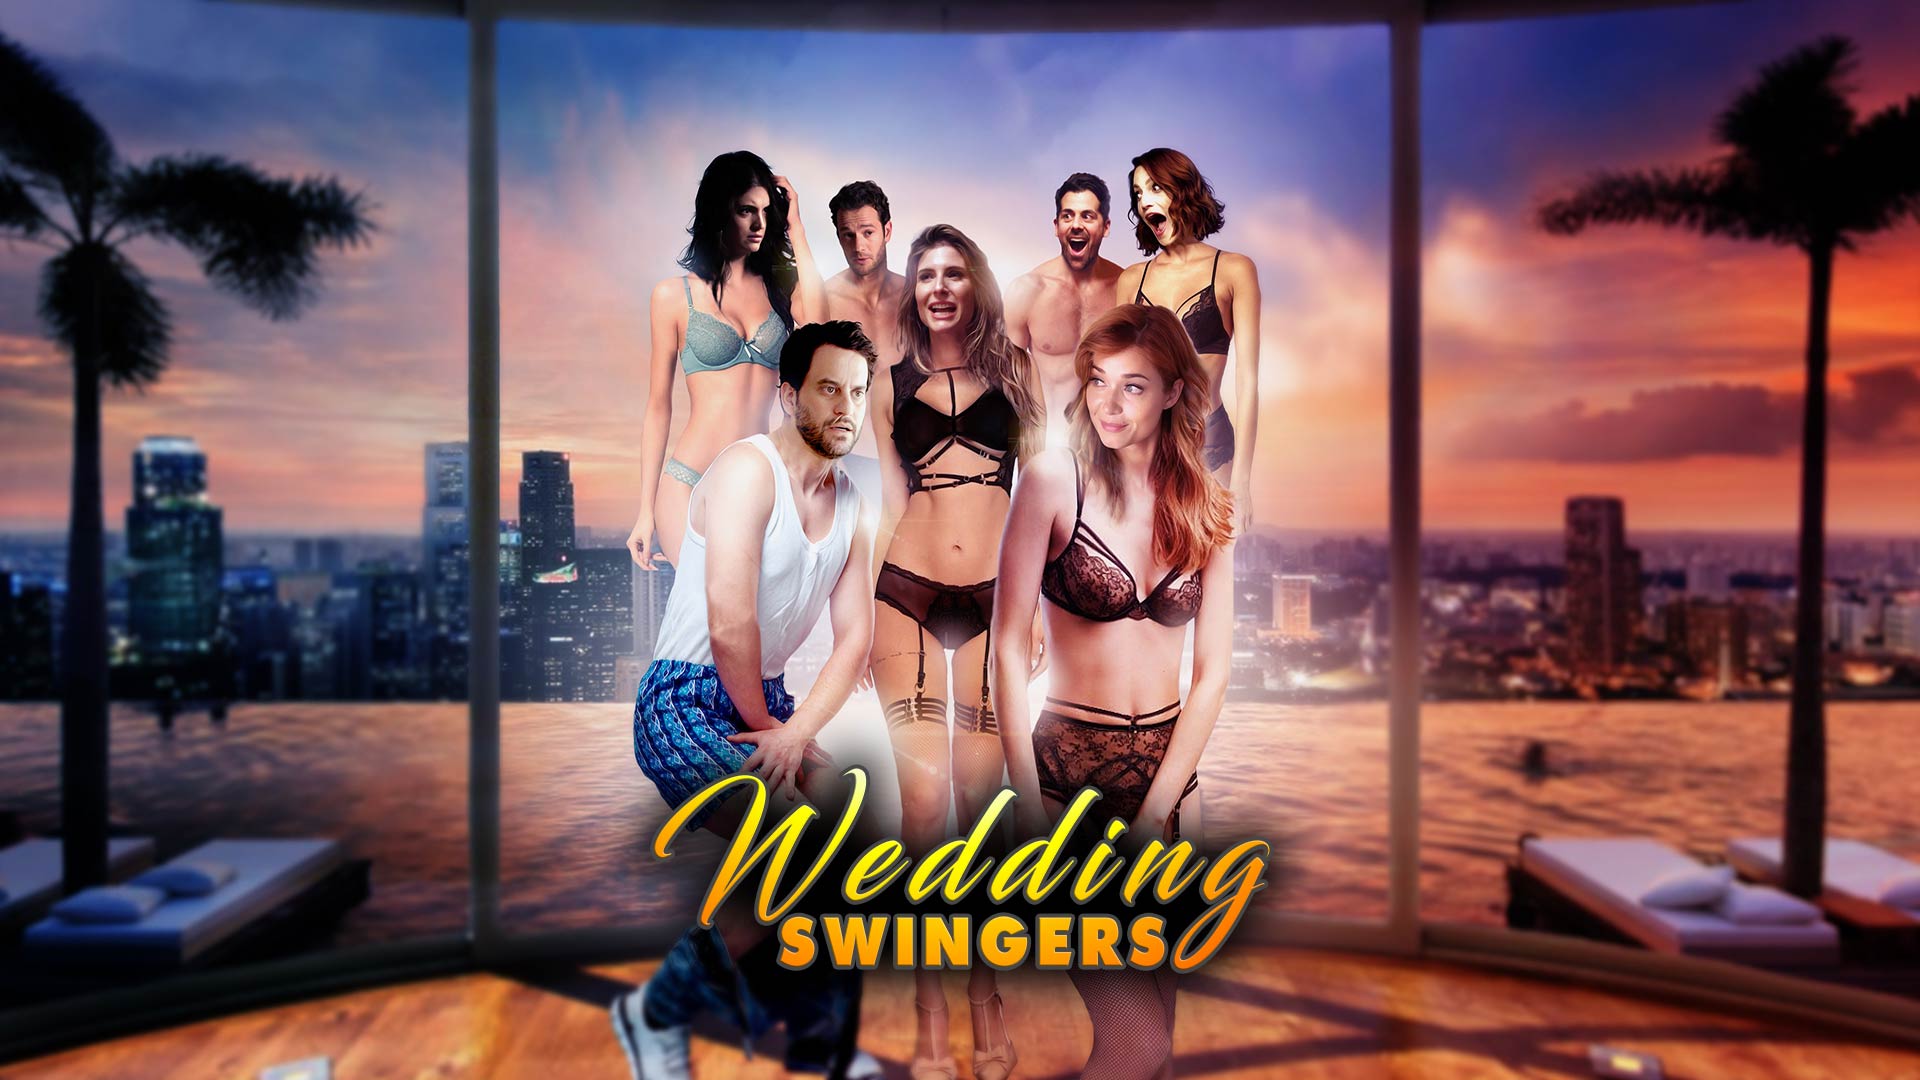 Wedding Swingers | Official Trailer | Watch Movie Free @FlixHouse